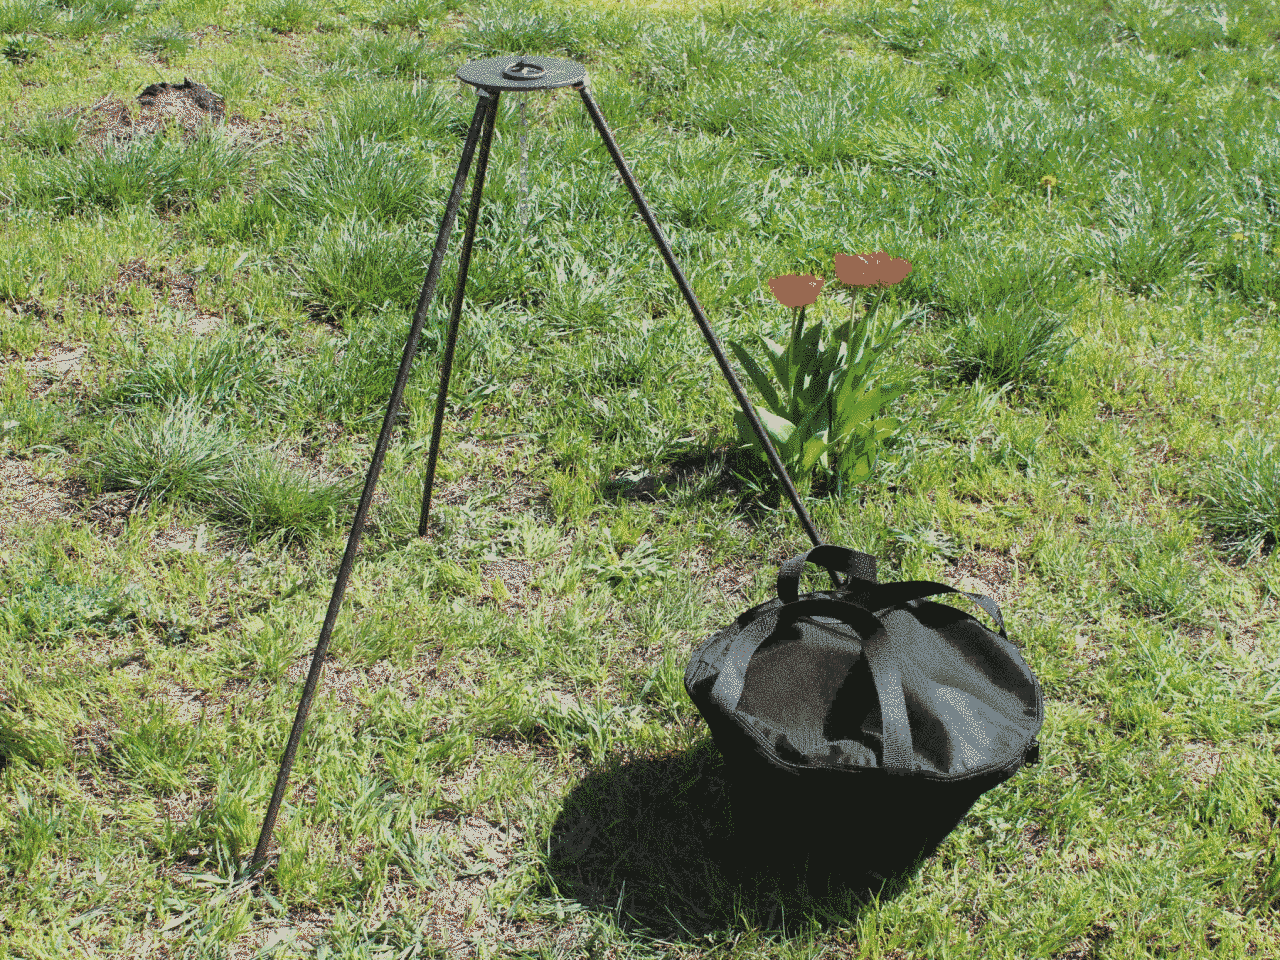 Tourist cast iron cauldron 6 l with lid, a bag and a tripod